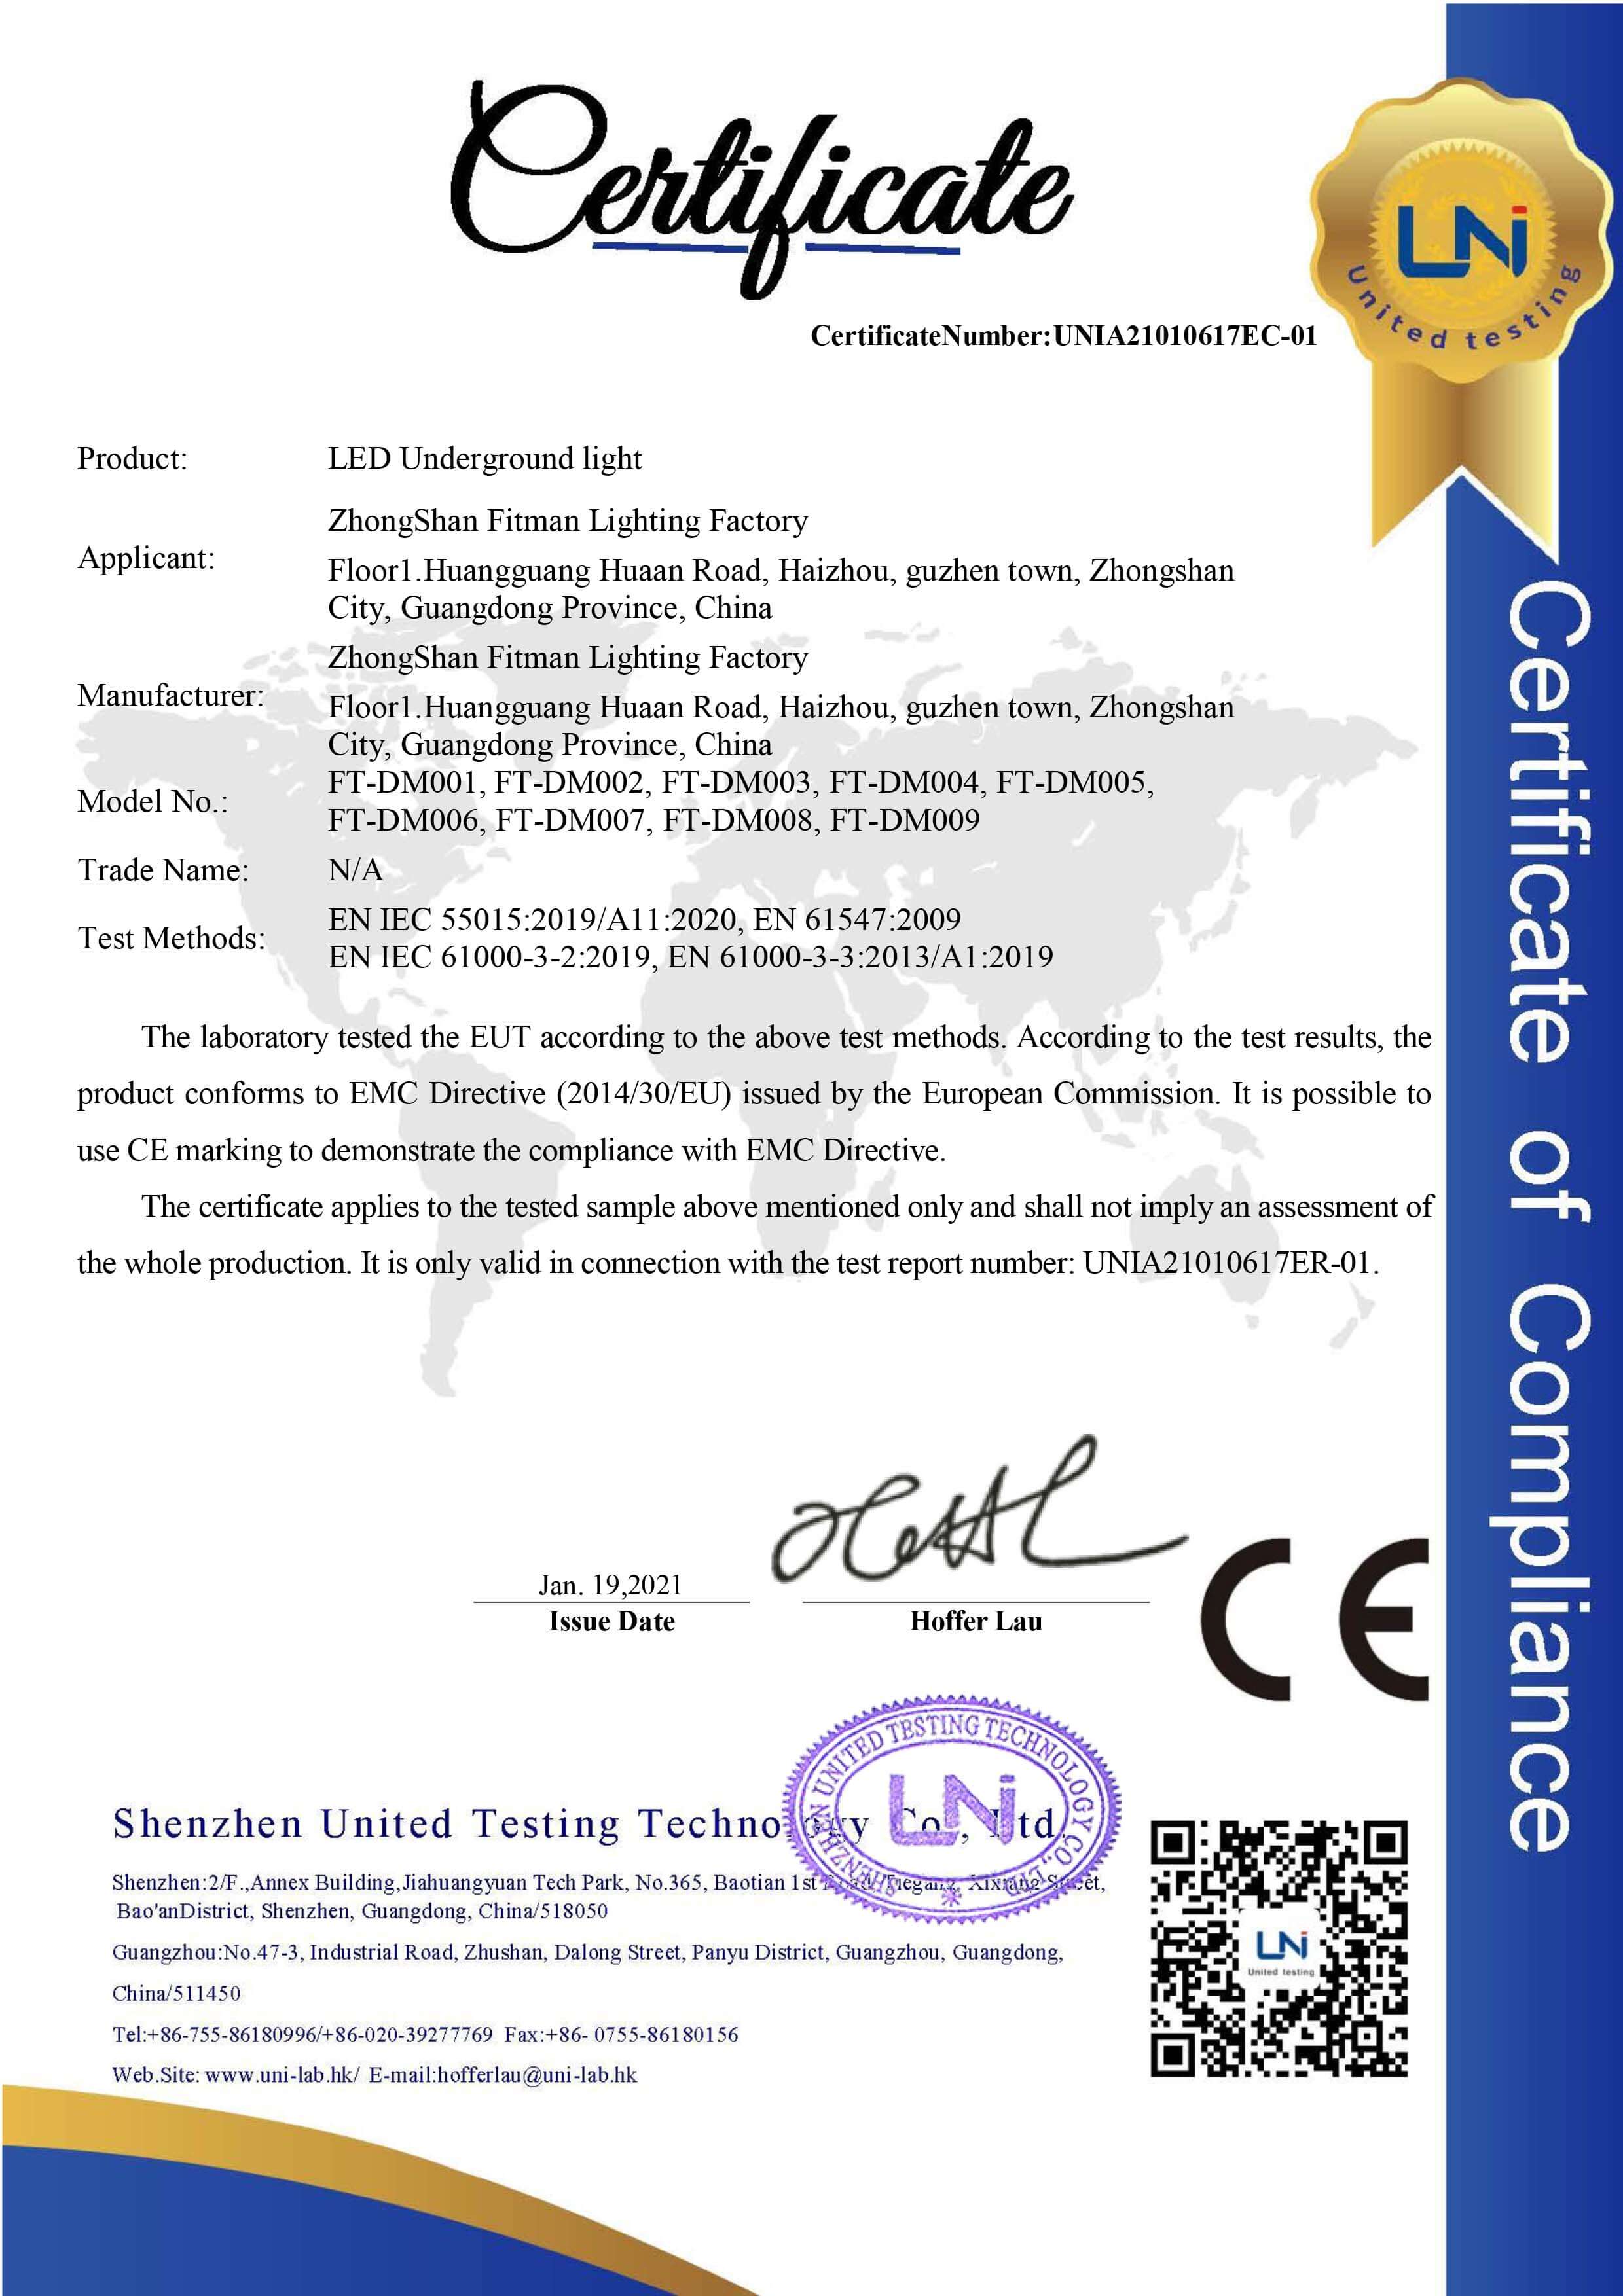 LED Underground light CE certificate